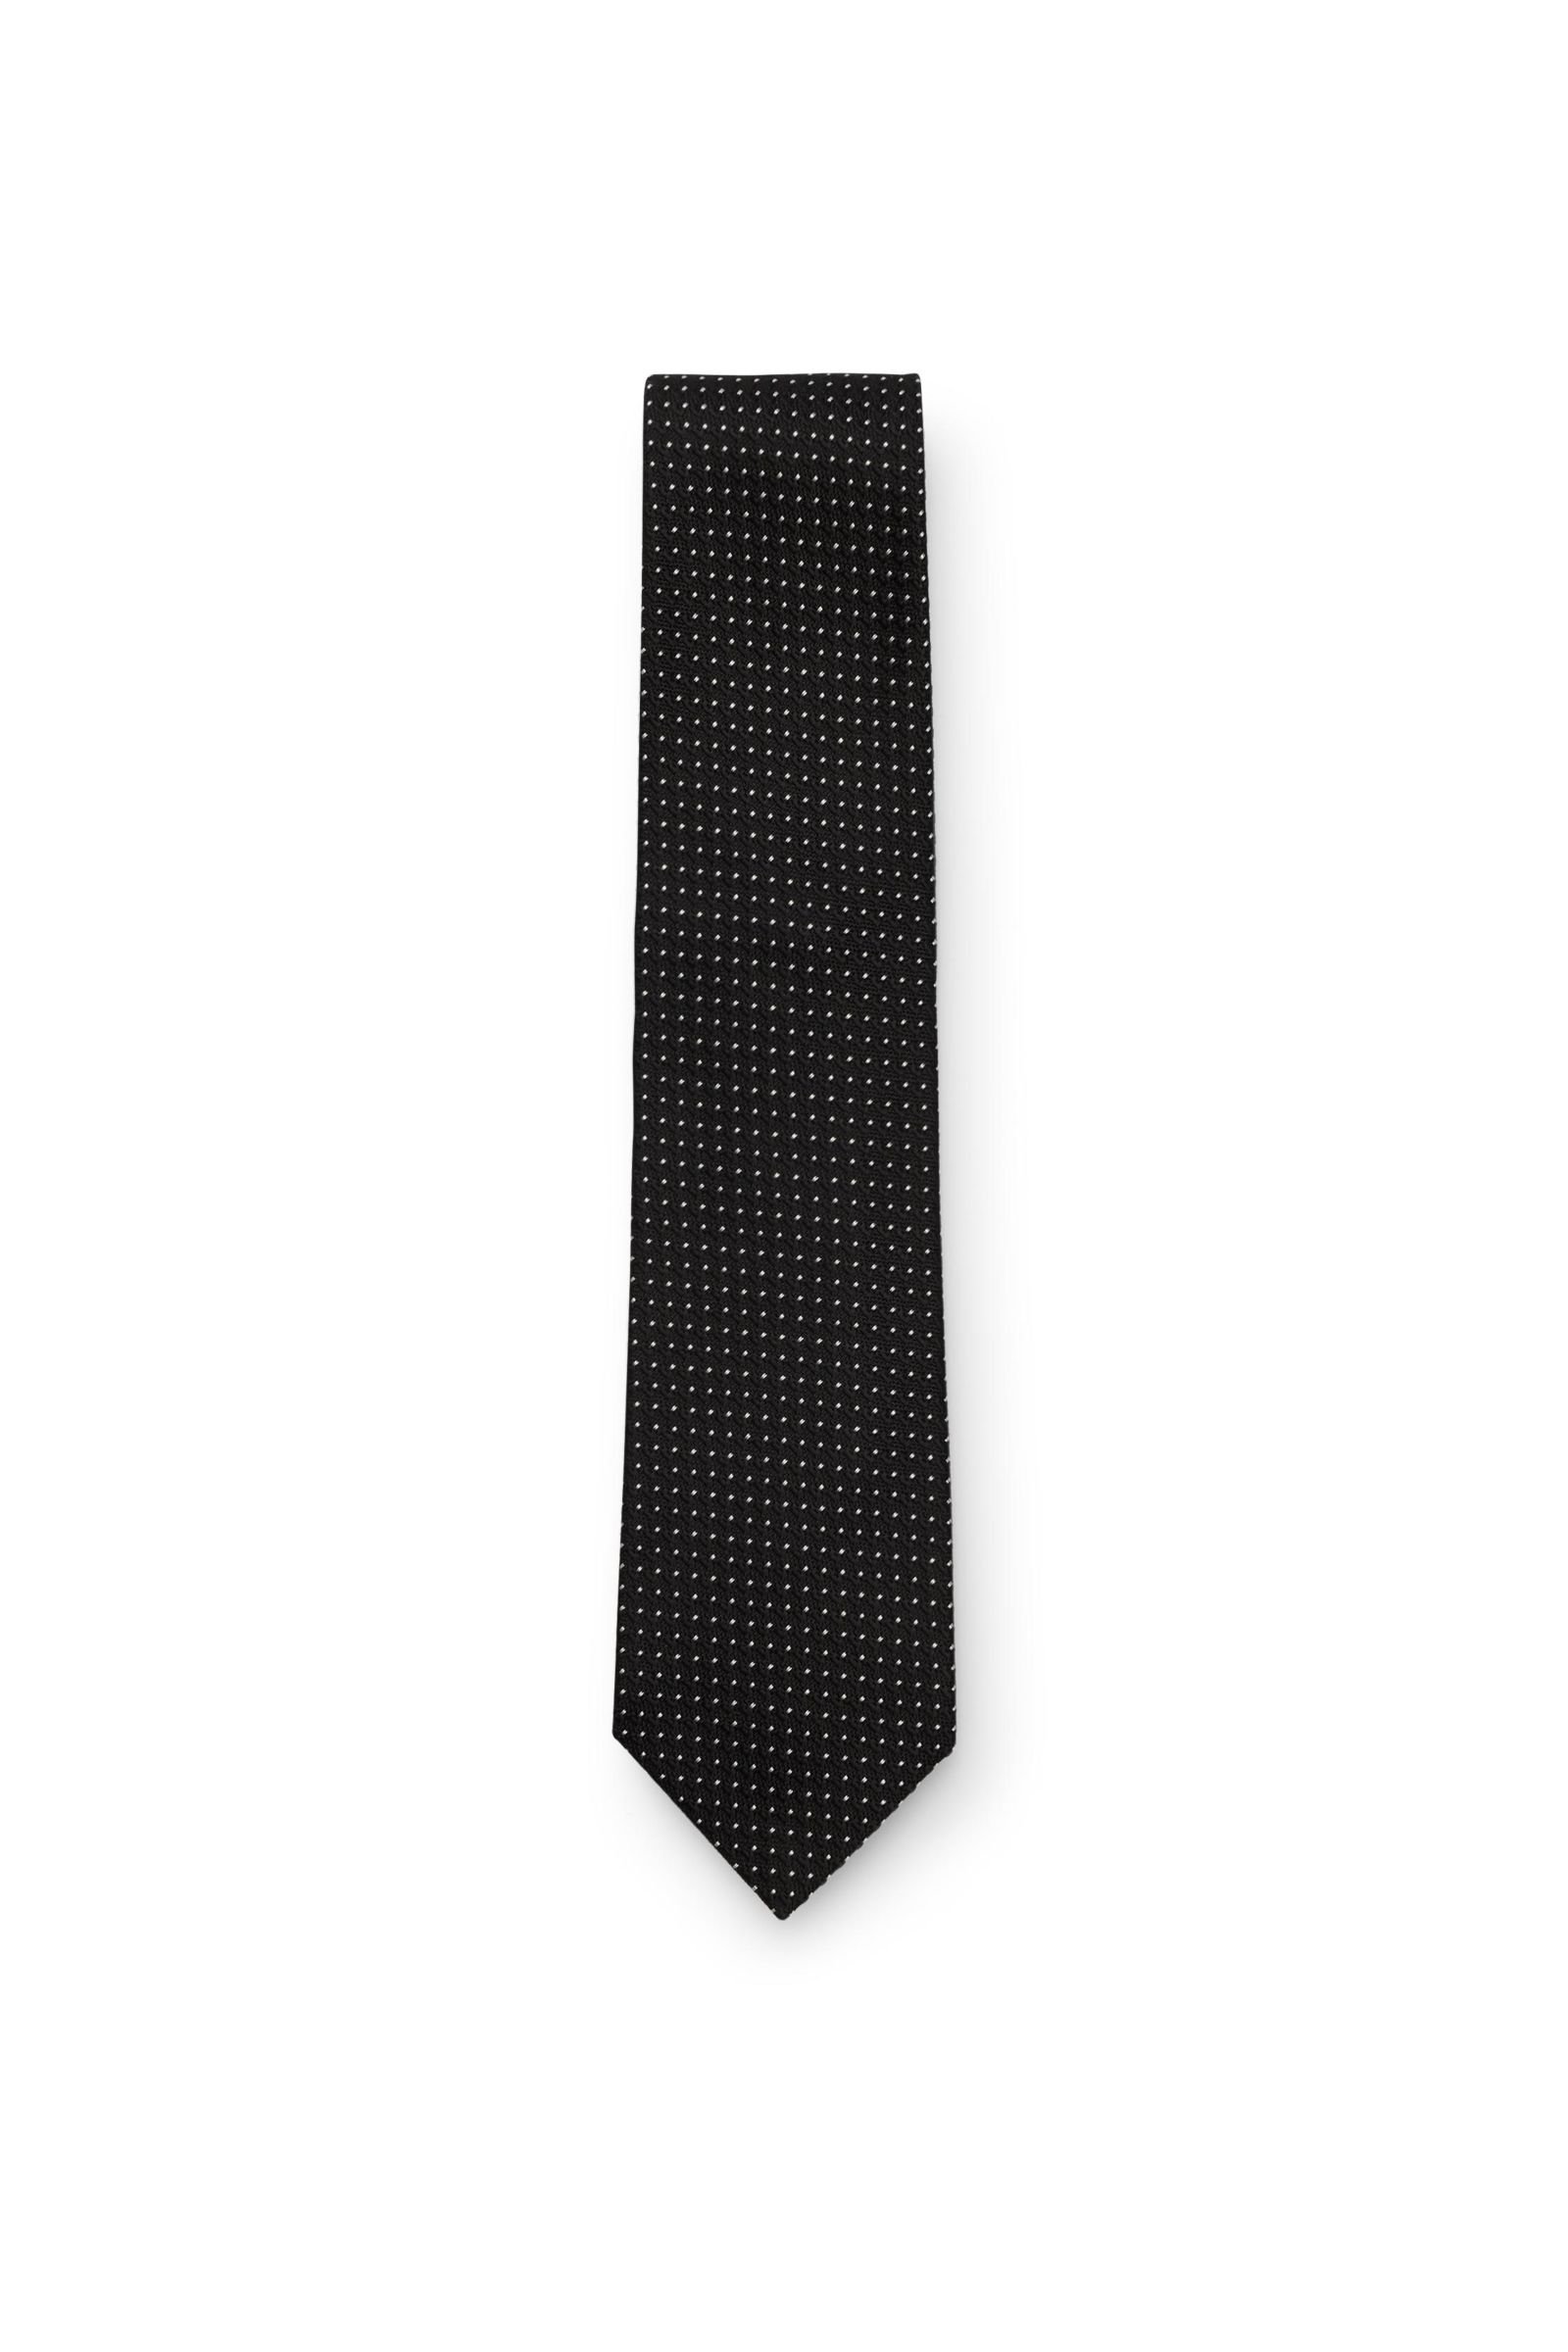 Silk tie black patterned